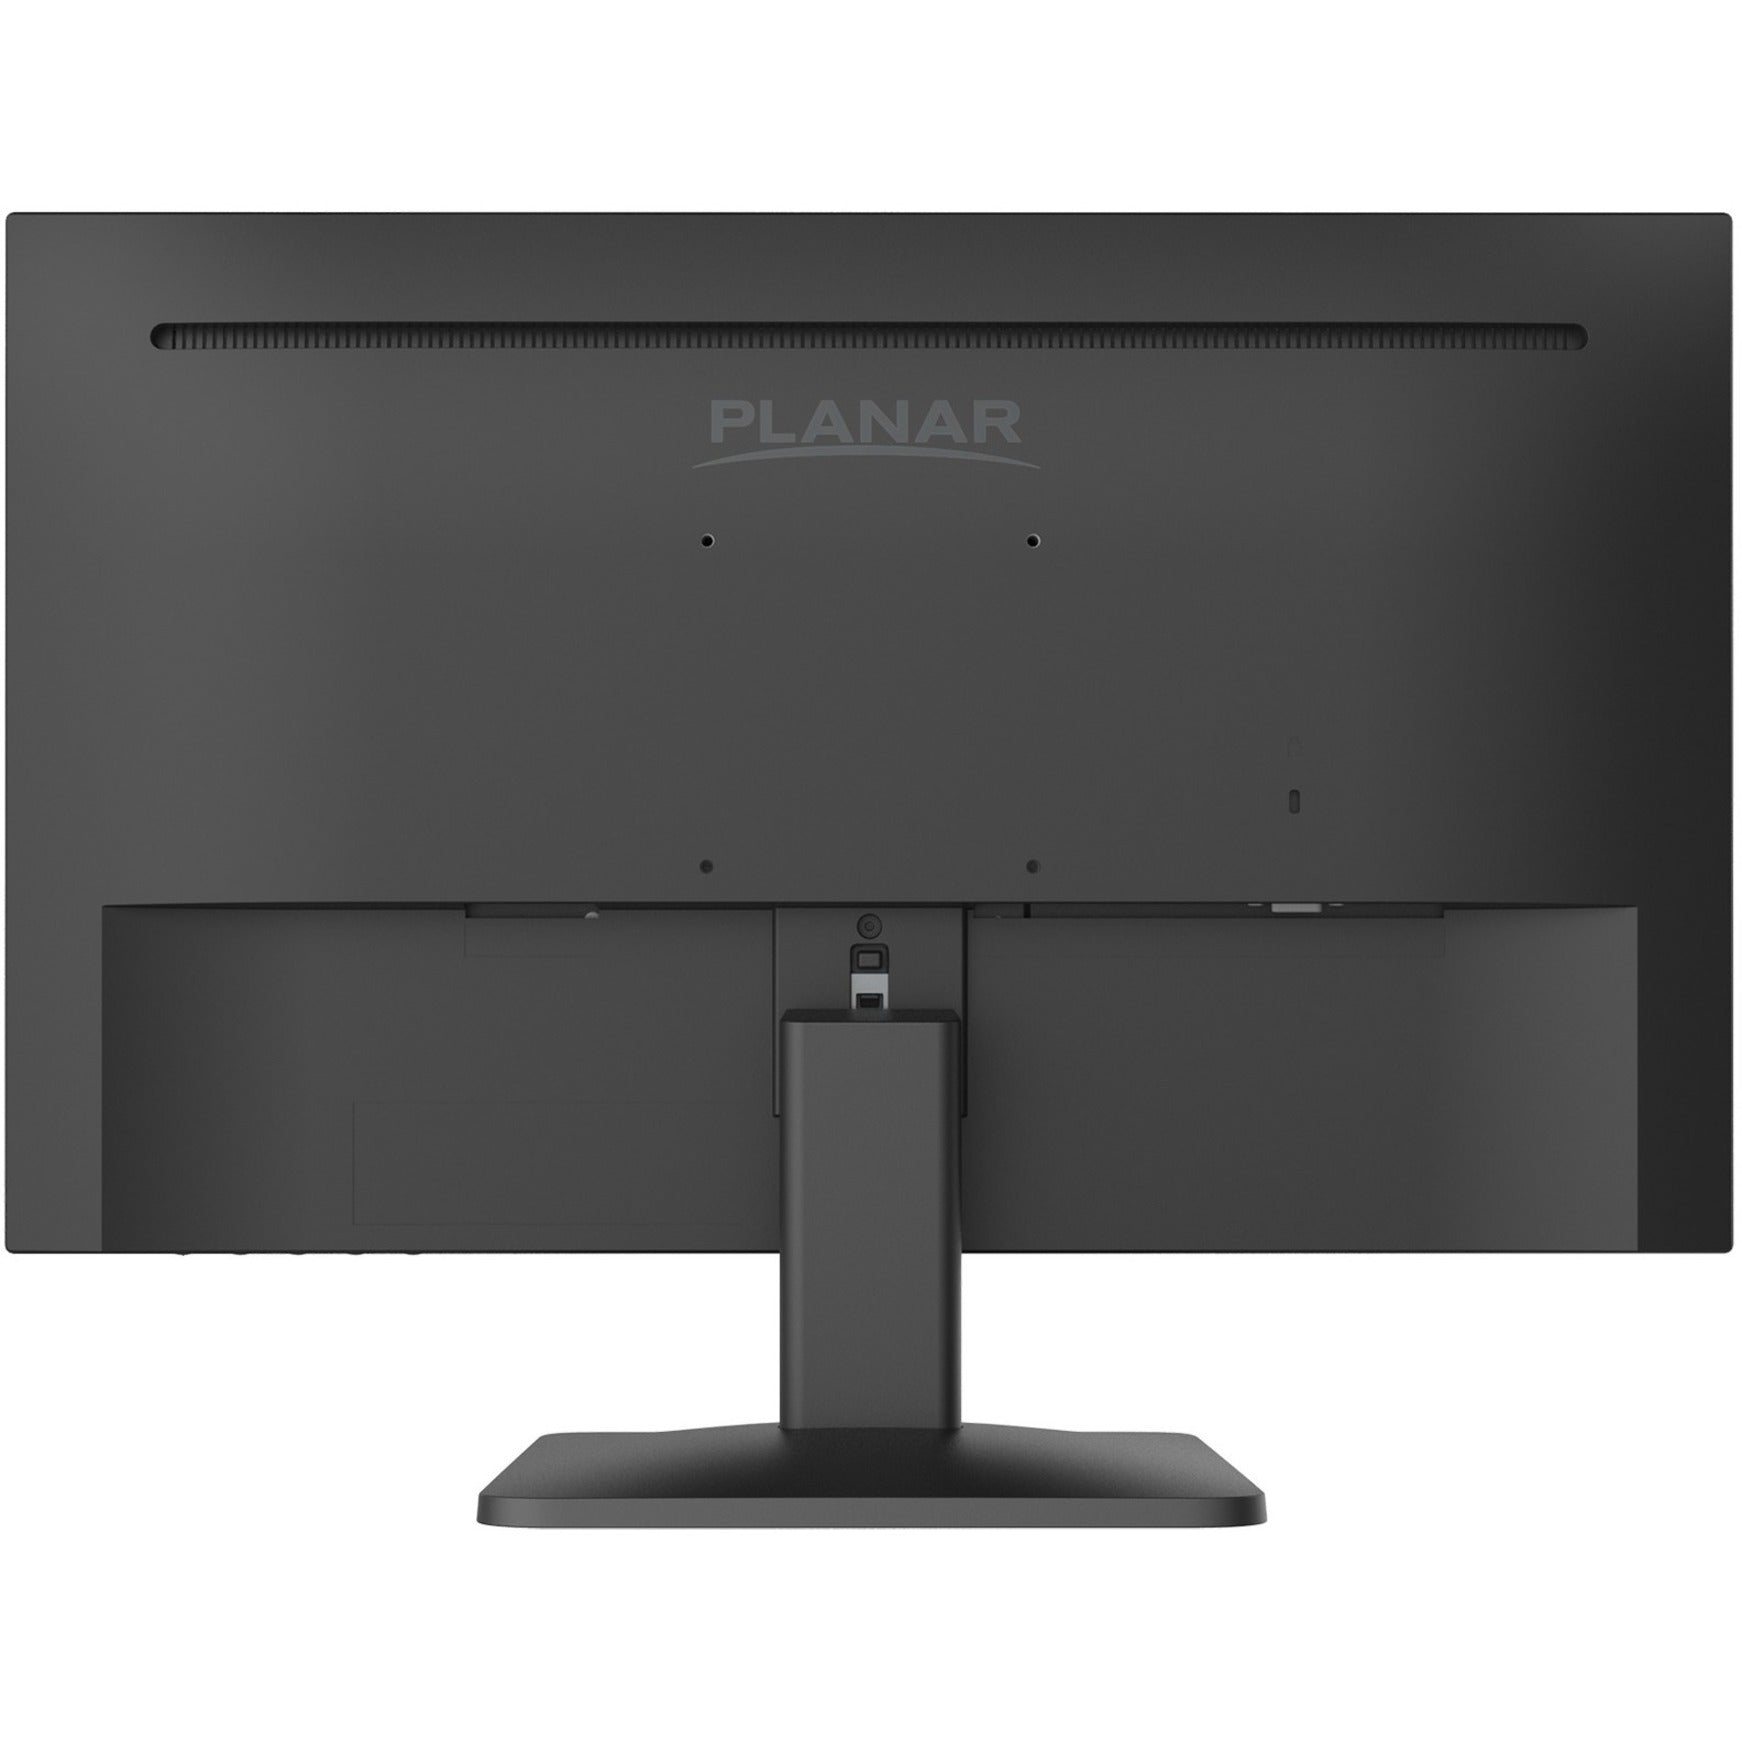 Planar 998-2121-00 PXN2400 23.8" Full HD LCD Monitor, 16:9, Black